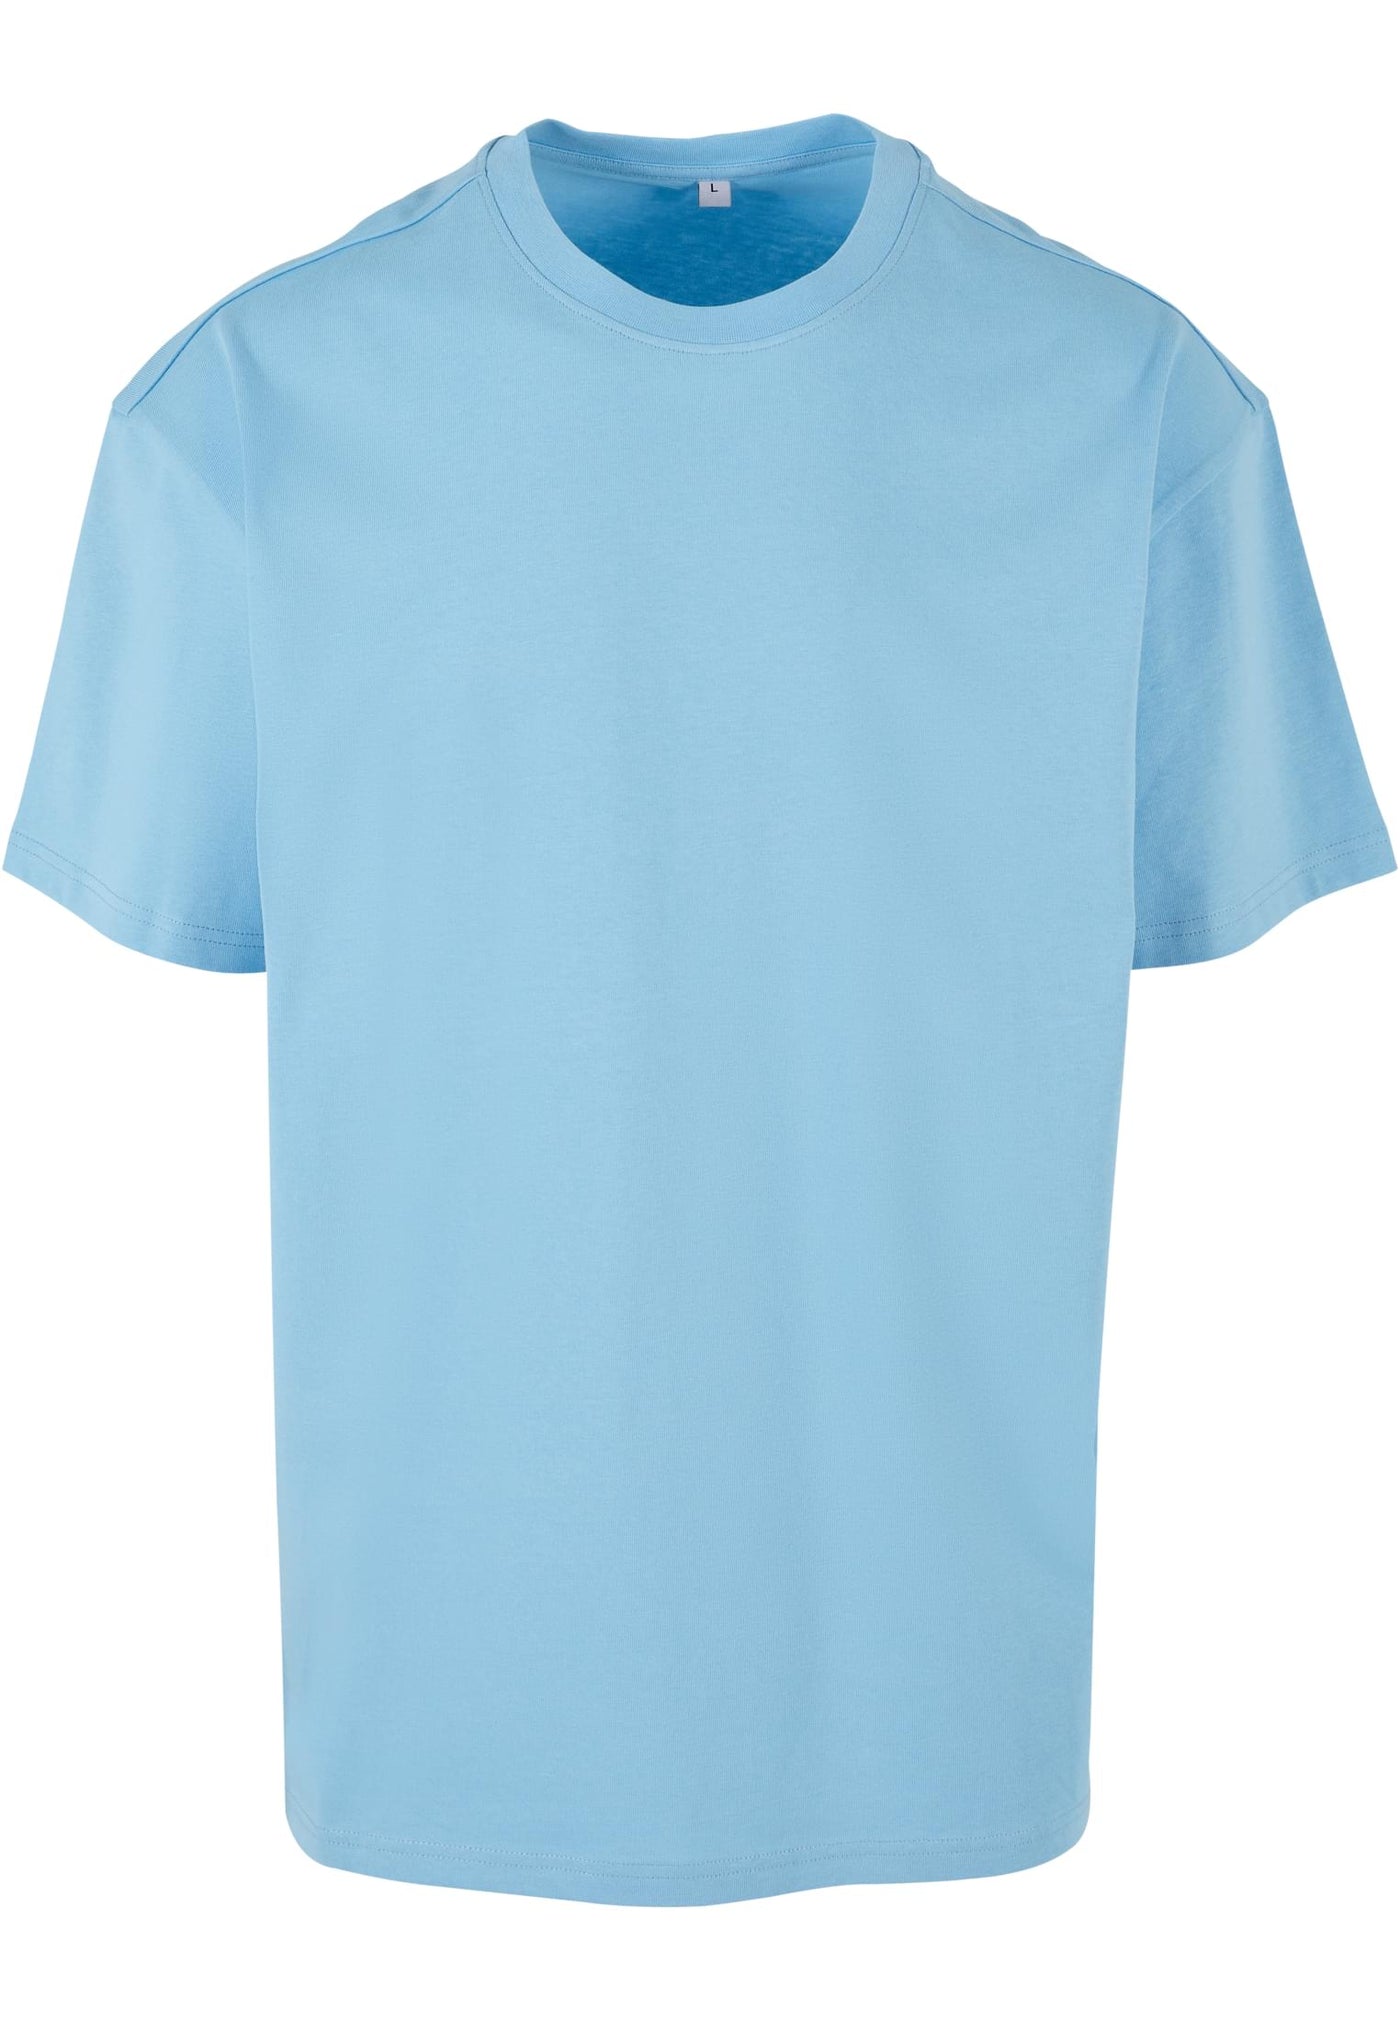 YO-C BY 102 Heavy Oversized Blank T-Shirt - Baltic Blue